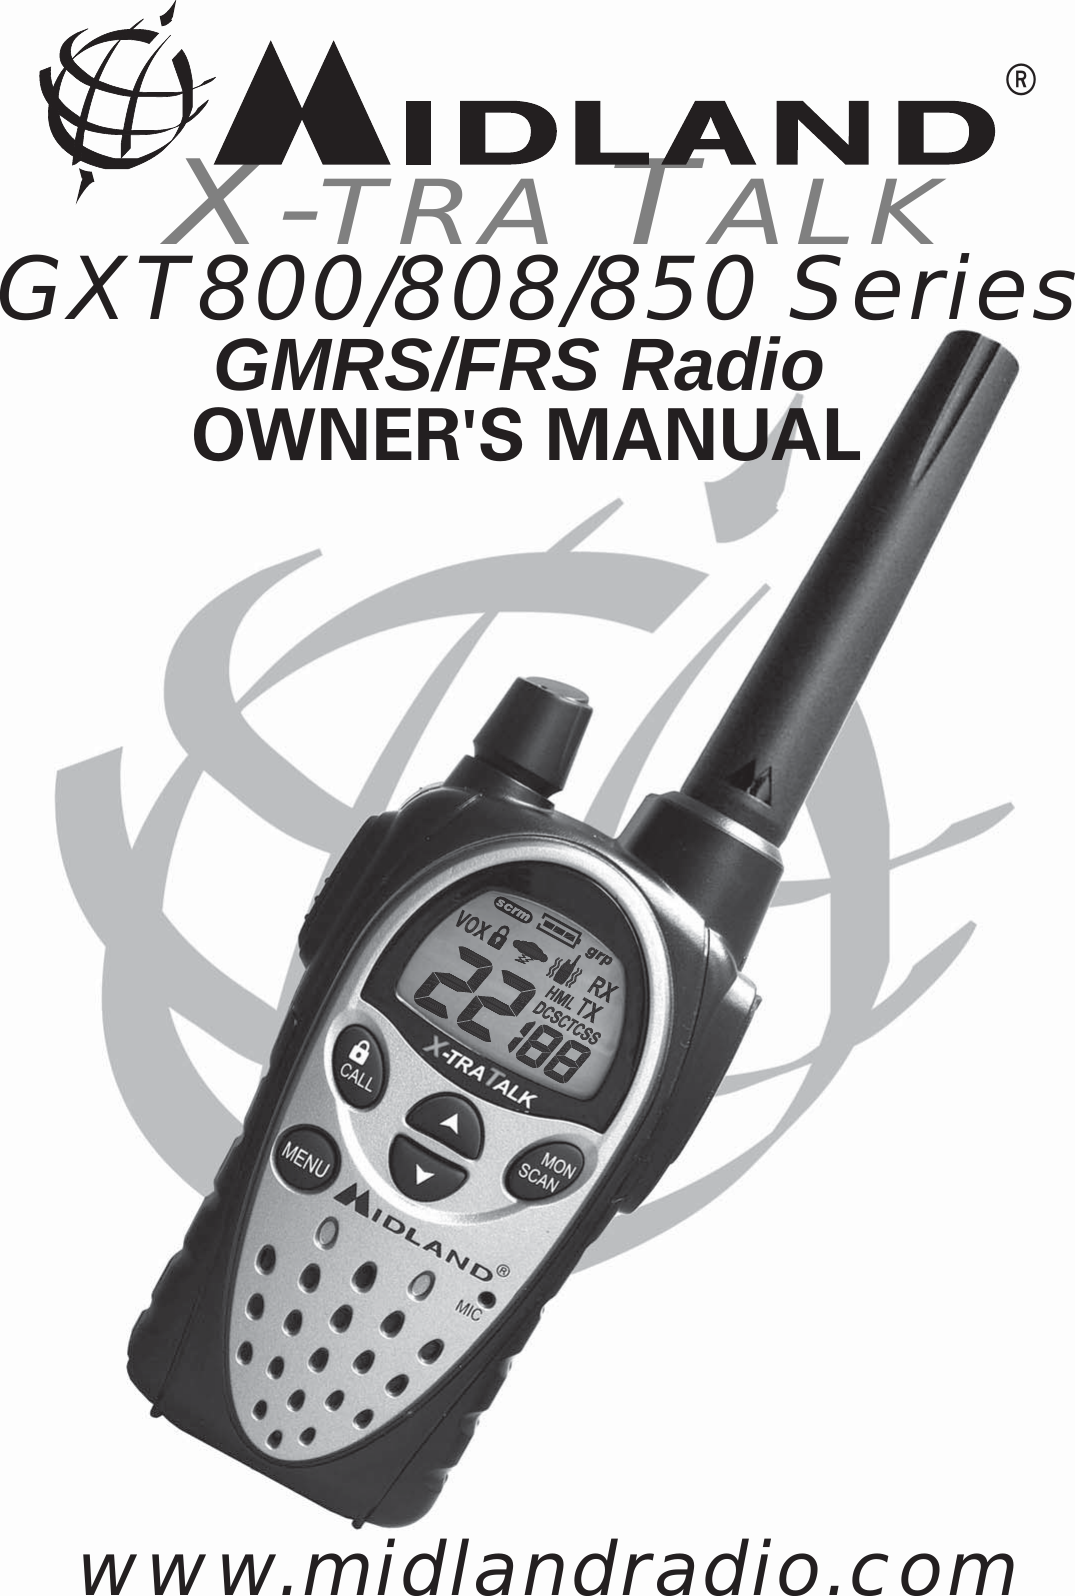   GXT800/808/850 Series              GMRS/FRS RadioX-TRA TALK®OWNER&apos;S MANUALwww.midlandradio.com